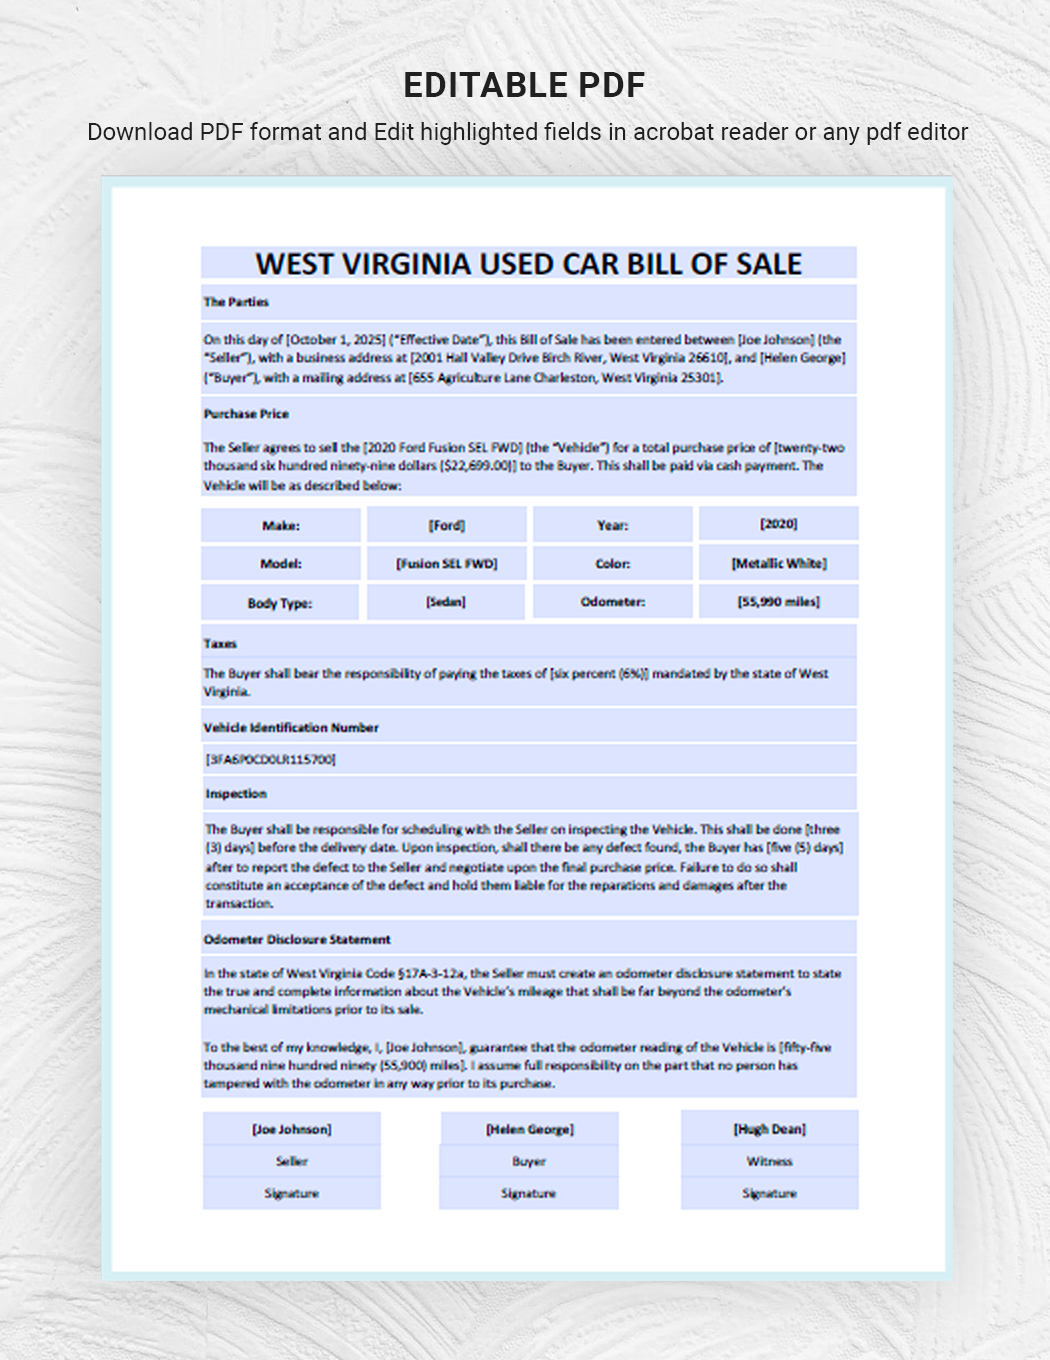 West Virginia Used Car Bill of Sale Template